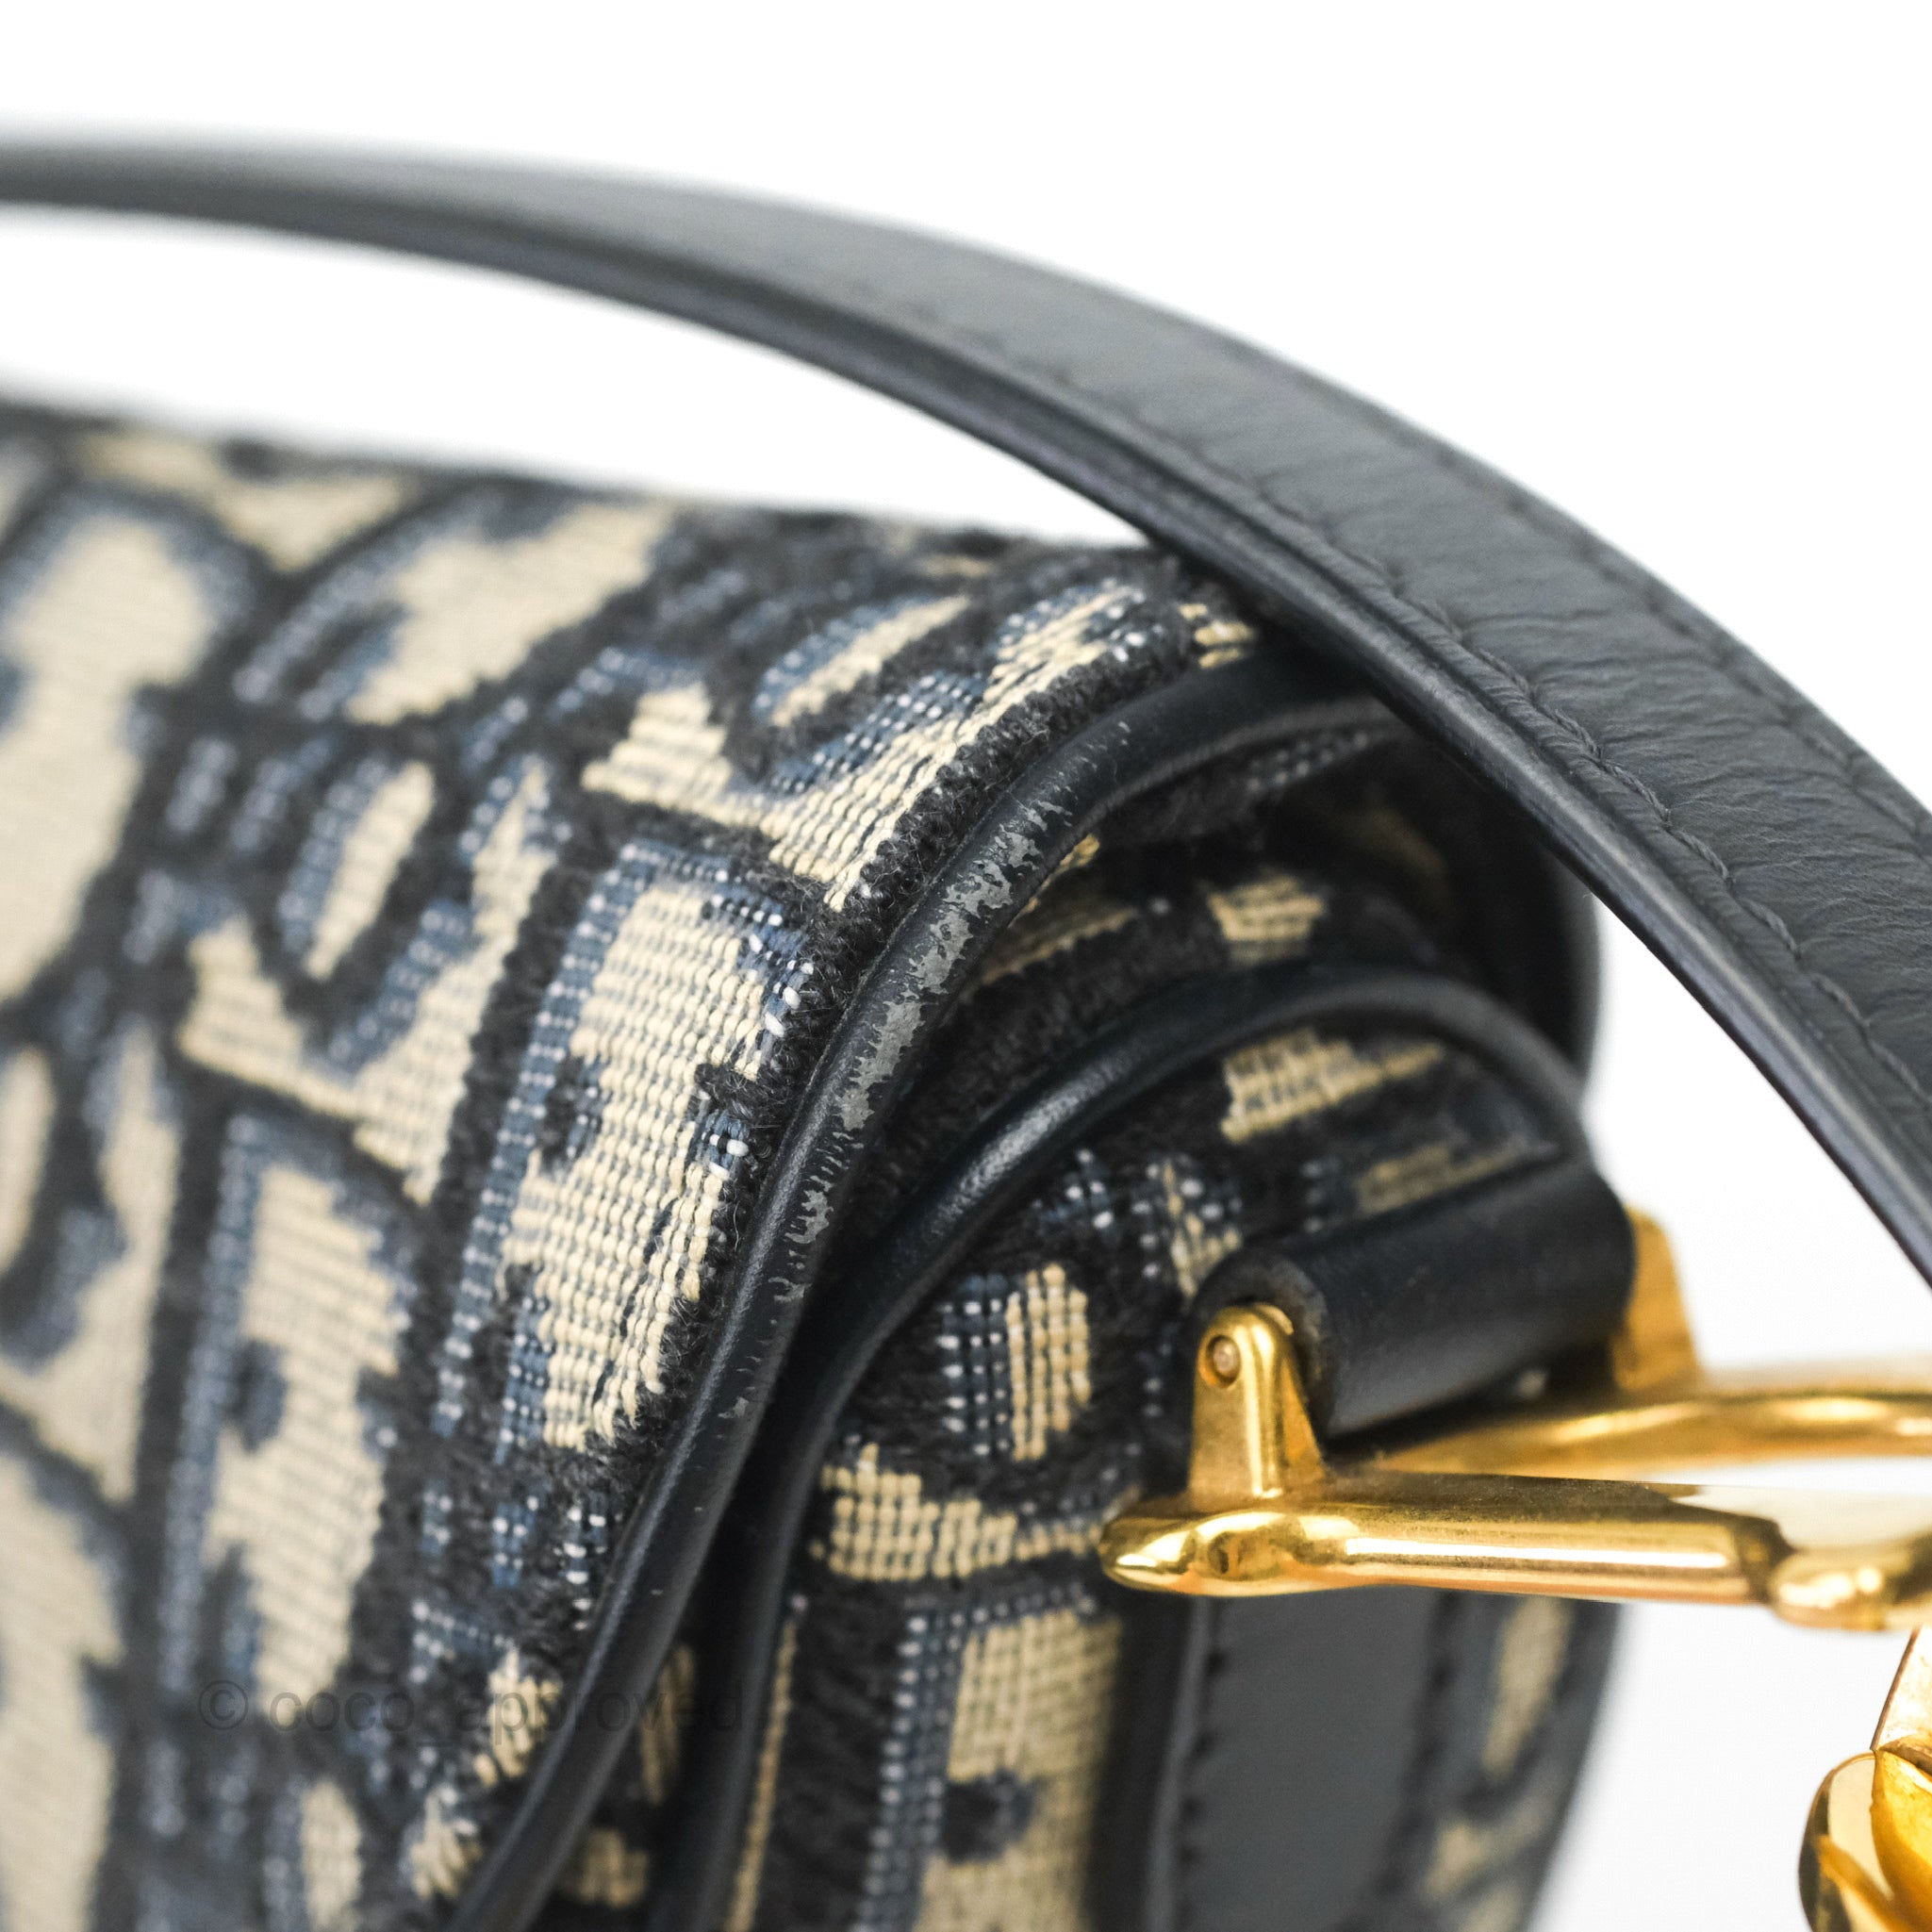 Christian Dior Mini Saddle Bag Blue Oblique Jacquard Gold Hardware – Coco  Approved Studio